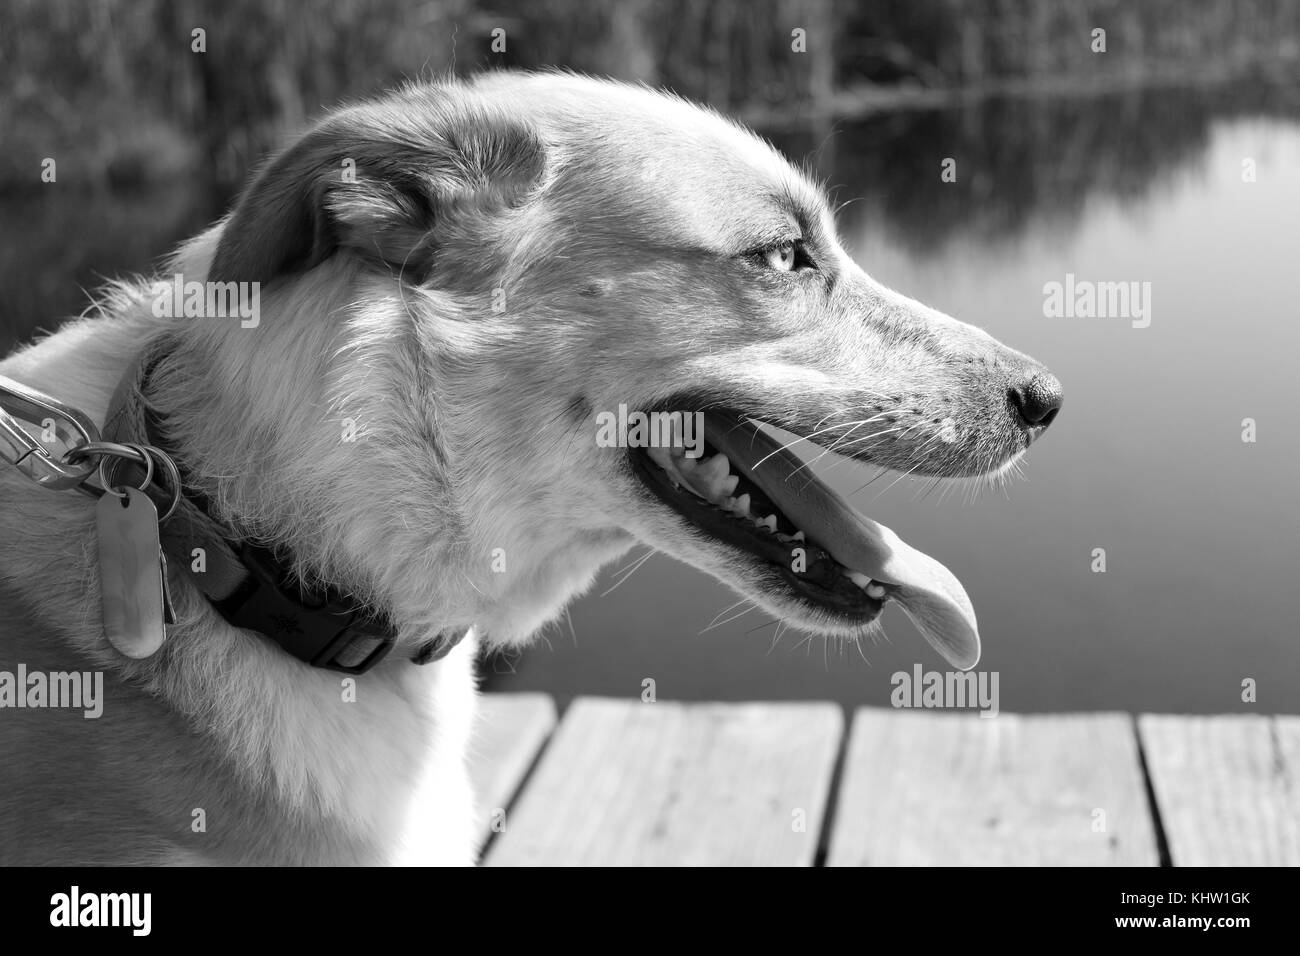 Husky/ Australian shepherd dog profile in black and white Stock Photo